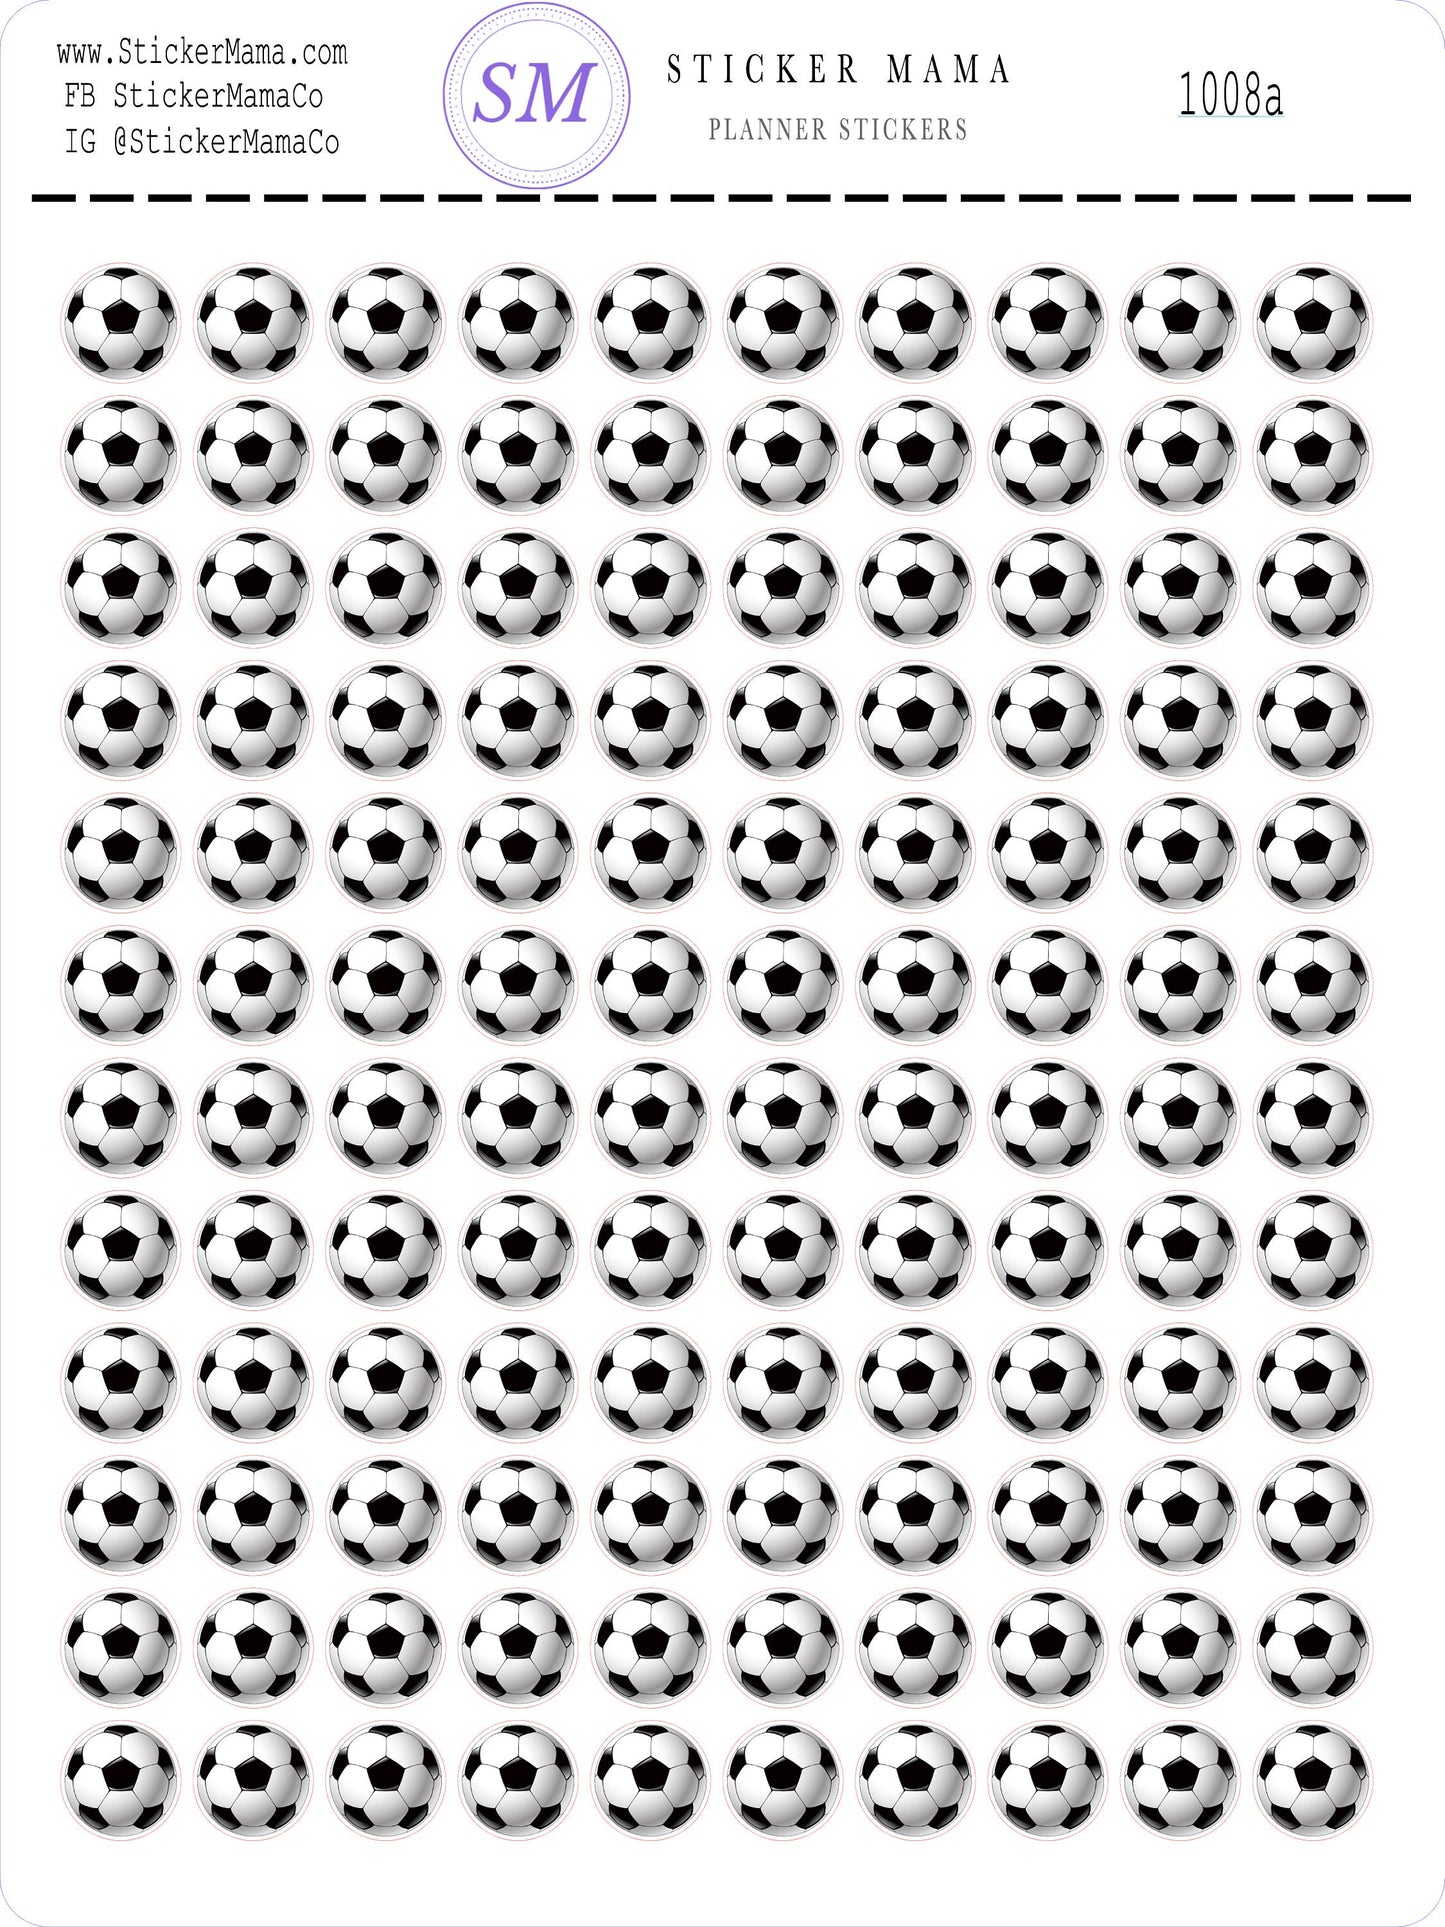 SOCCER PLANNER STICKERS 1008 soccer sticker kit soccer planner stickers for soccer sports stickers soccer games soccer practice